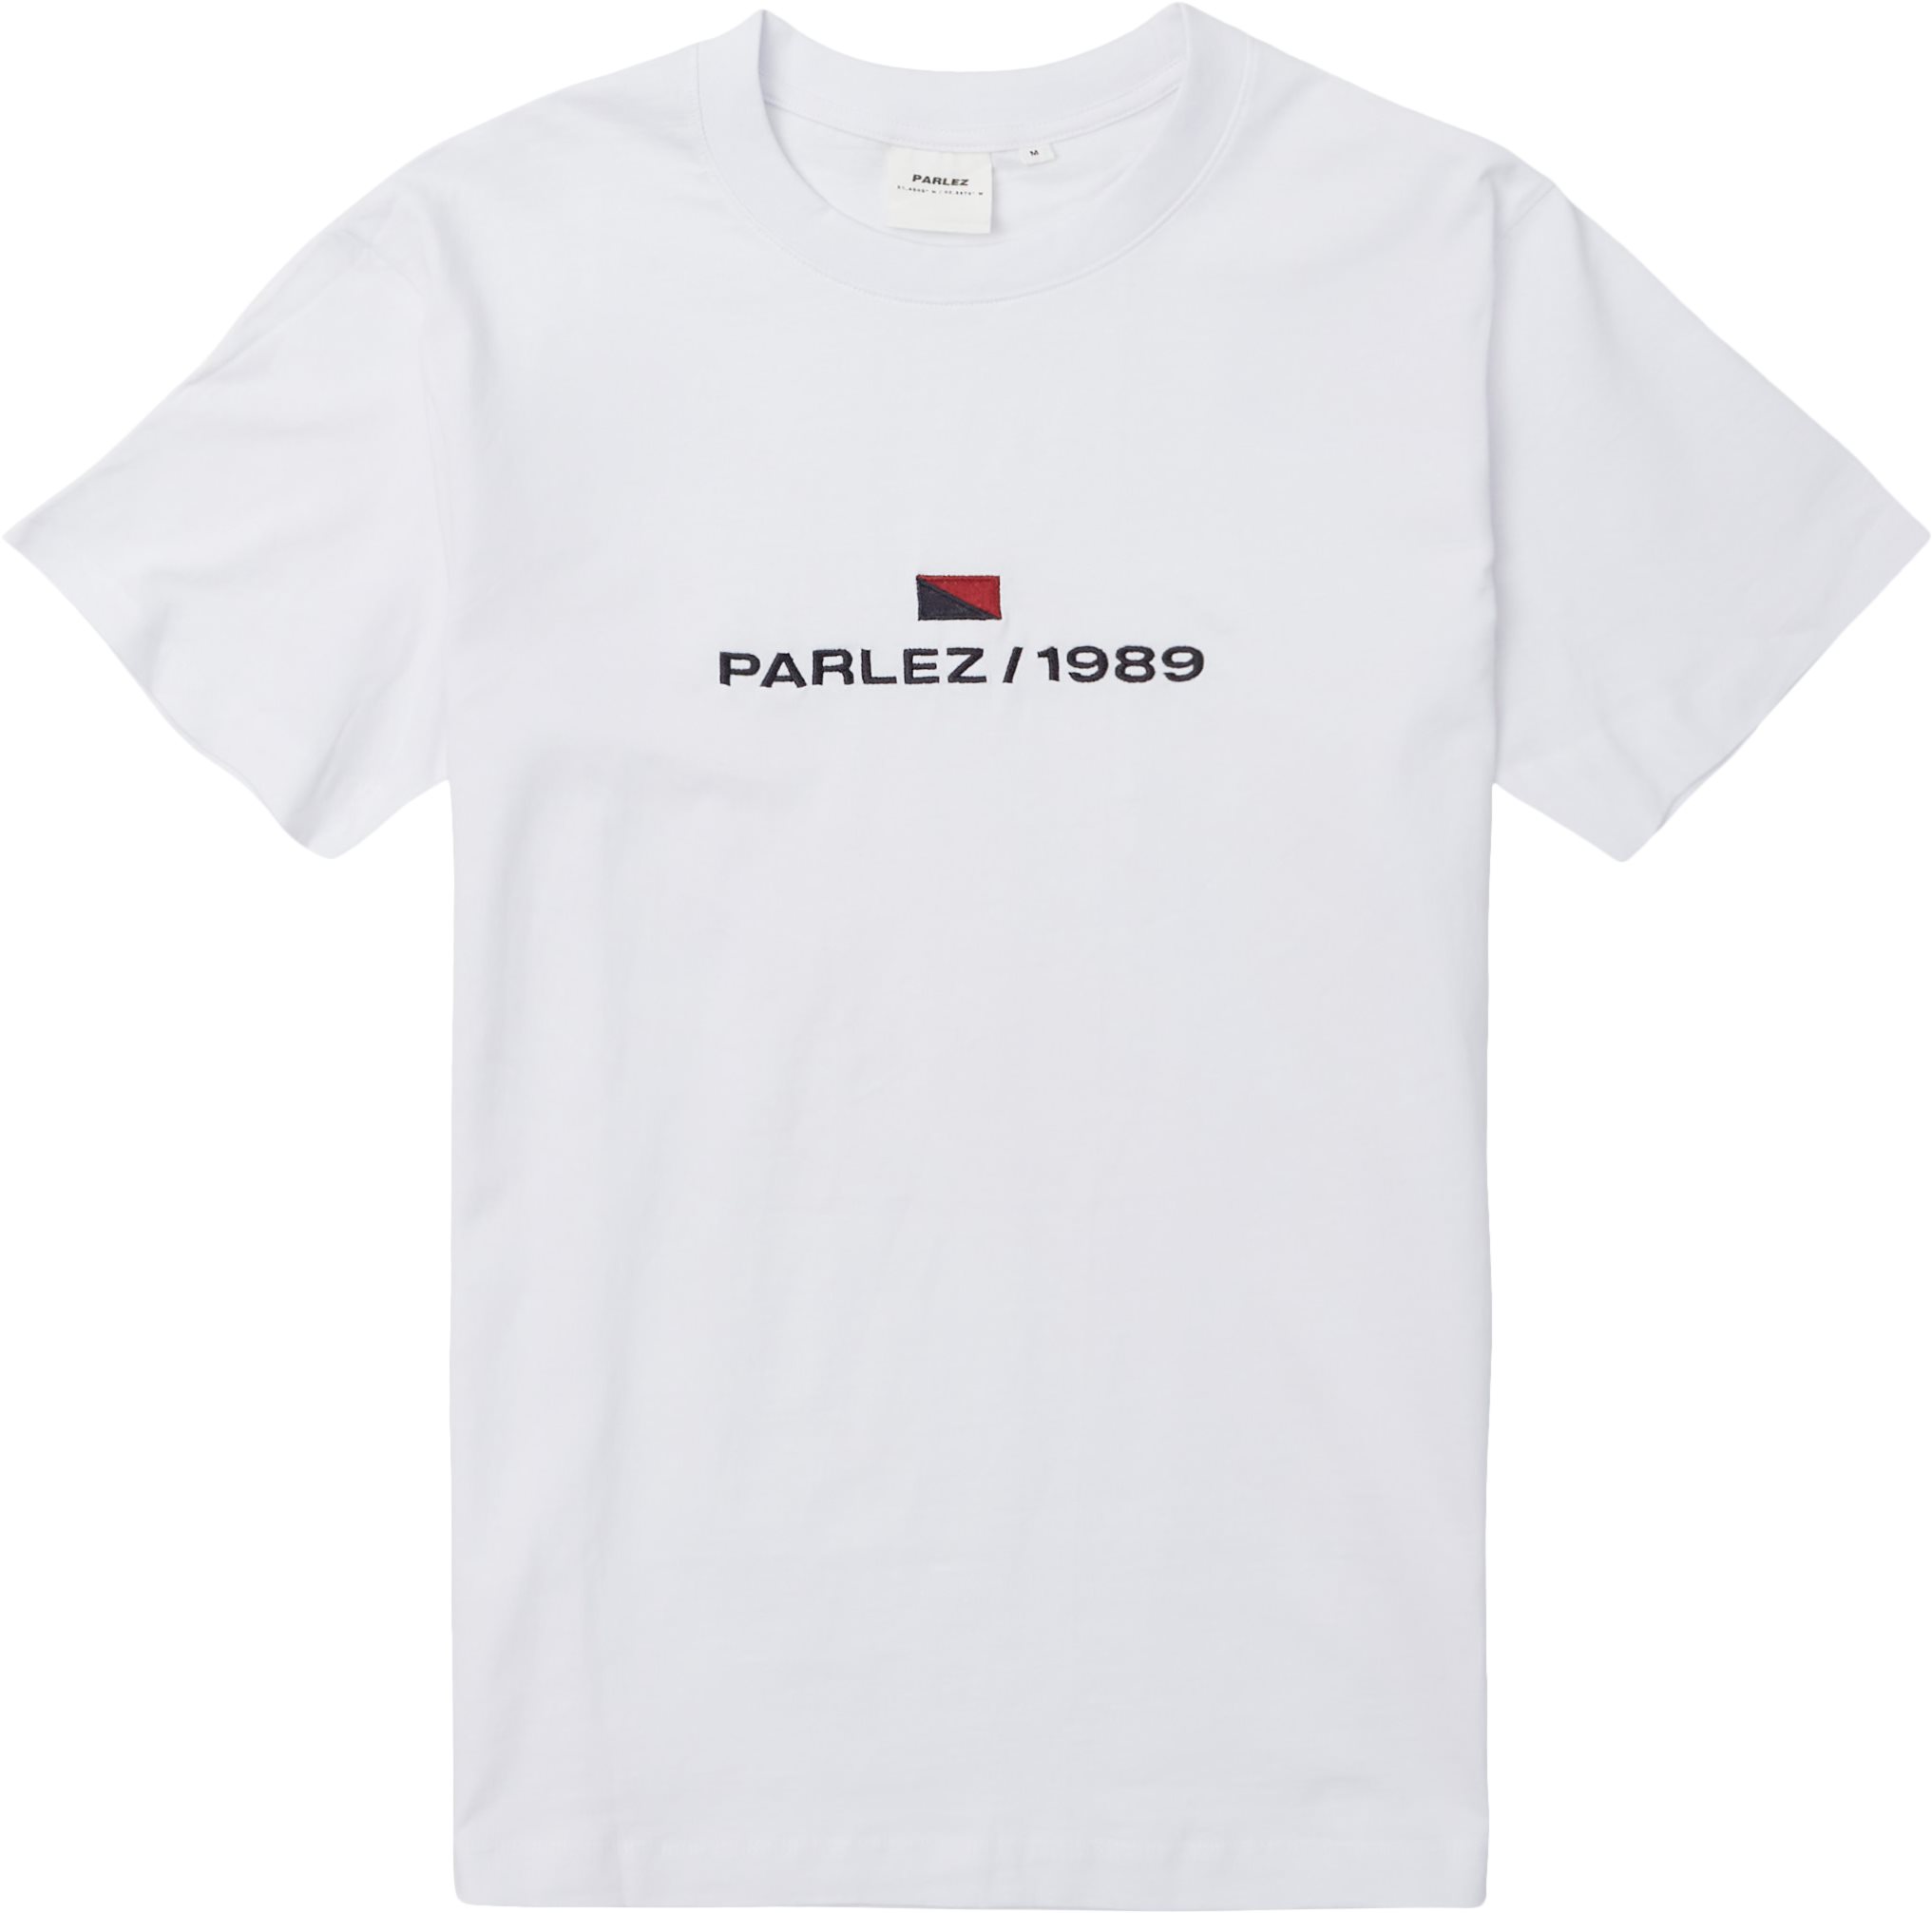 Cardinal Tee - T-shirts - Regular fit - White